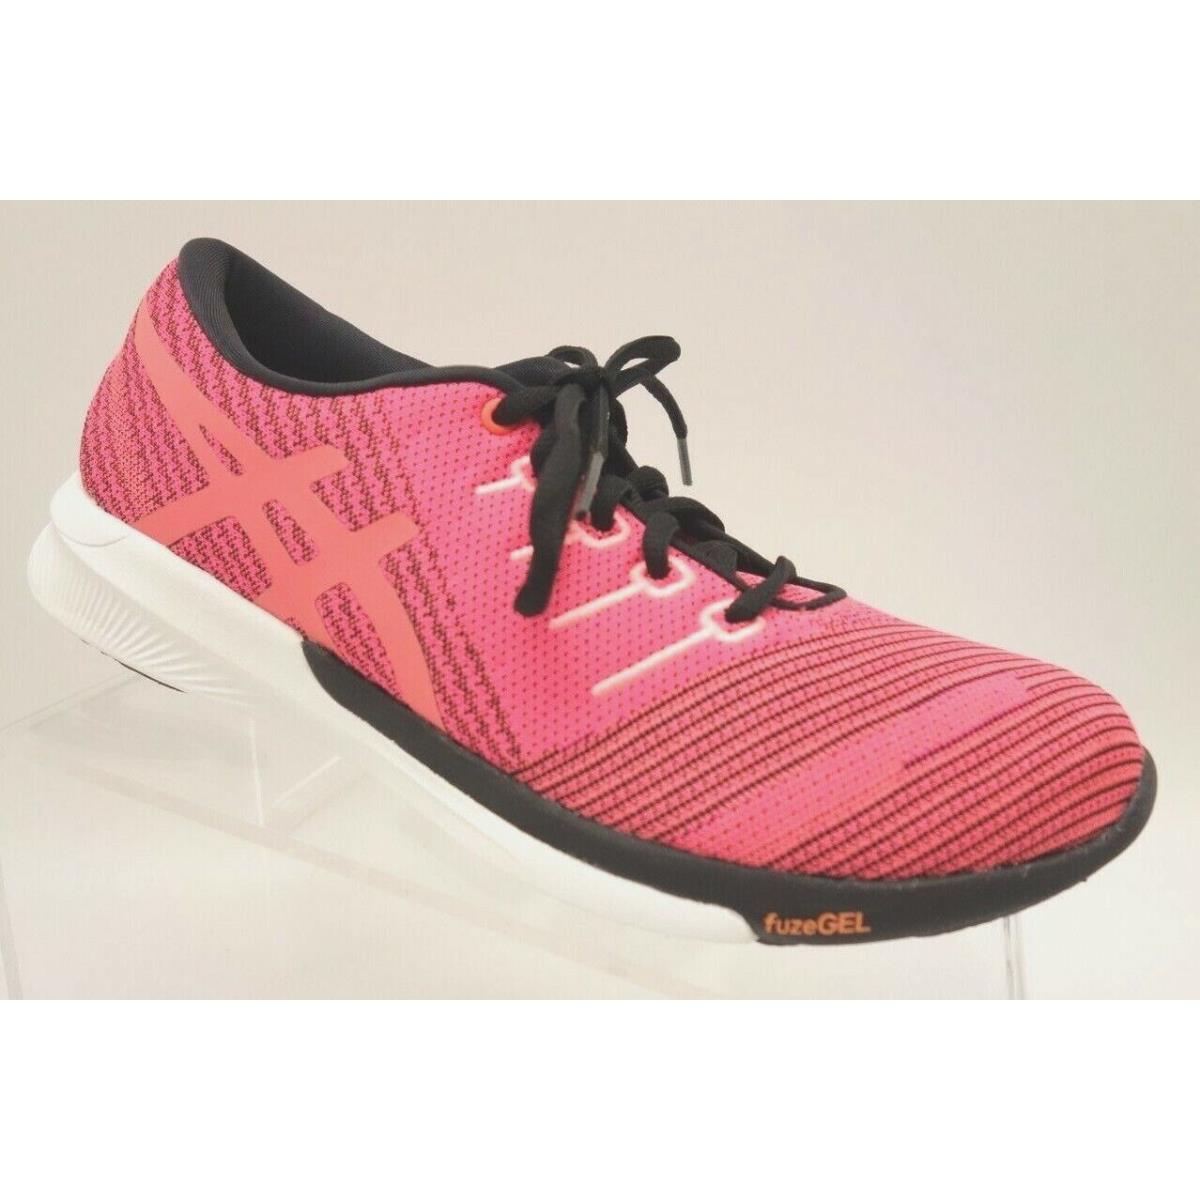 Asics Fuzex Knit Sneakers Women`s 9.5 M Flash Coral Black Shoe